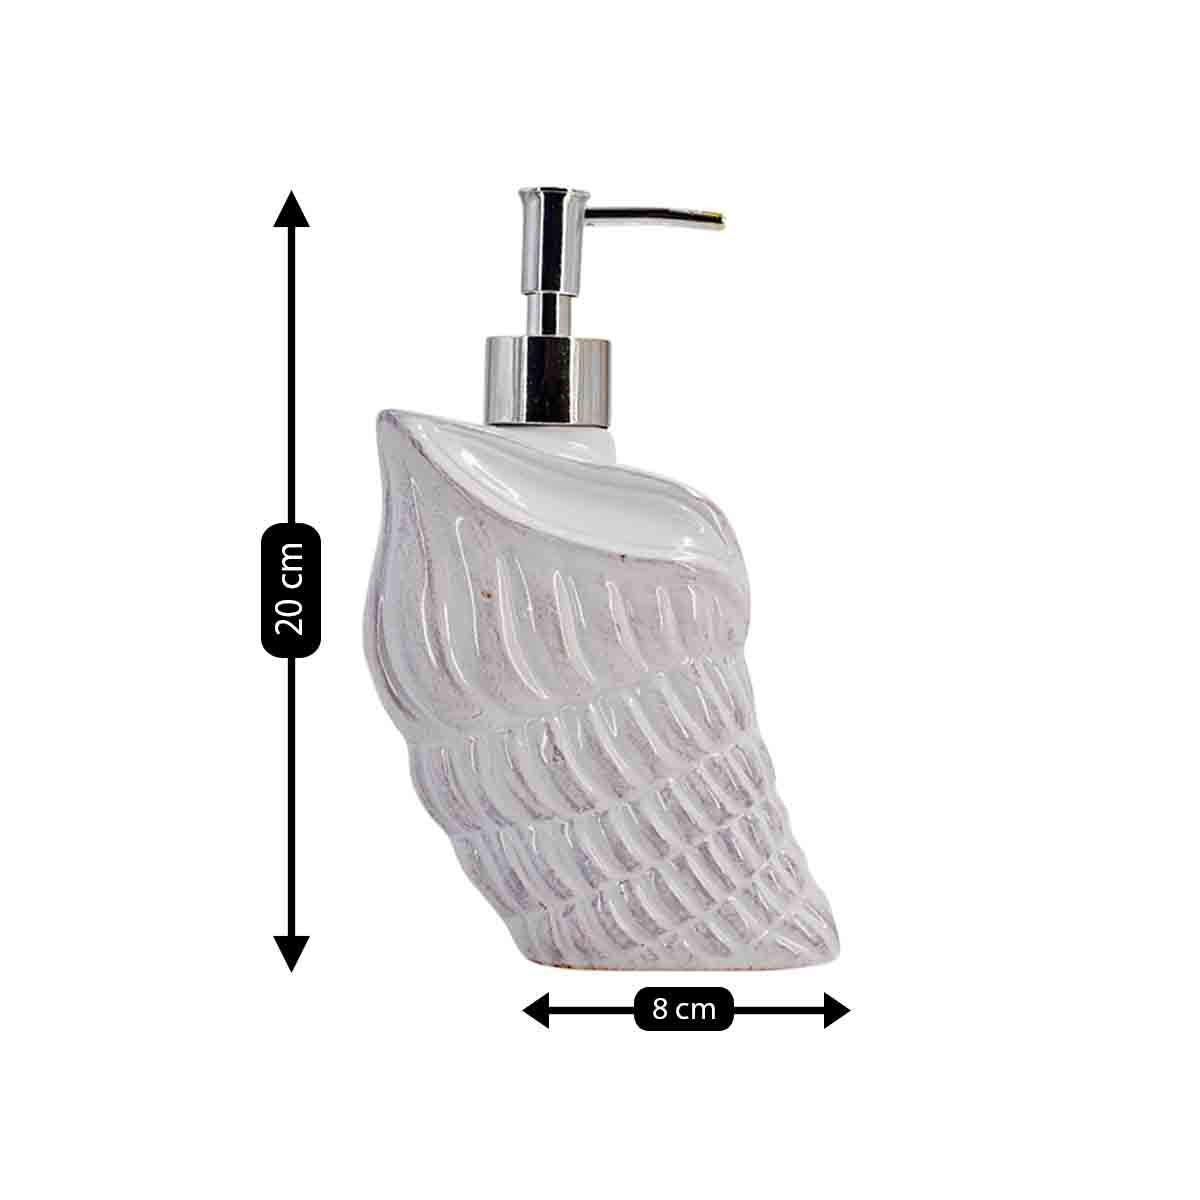 Ceramic Soap Dispenser handwash Pump for Bathroom, Set of 1, White (7965)